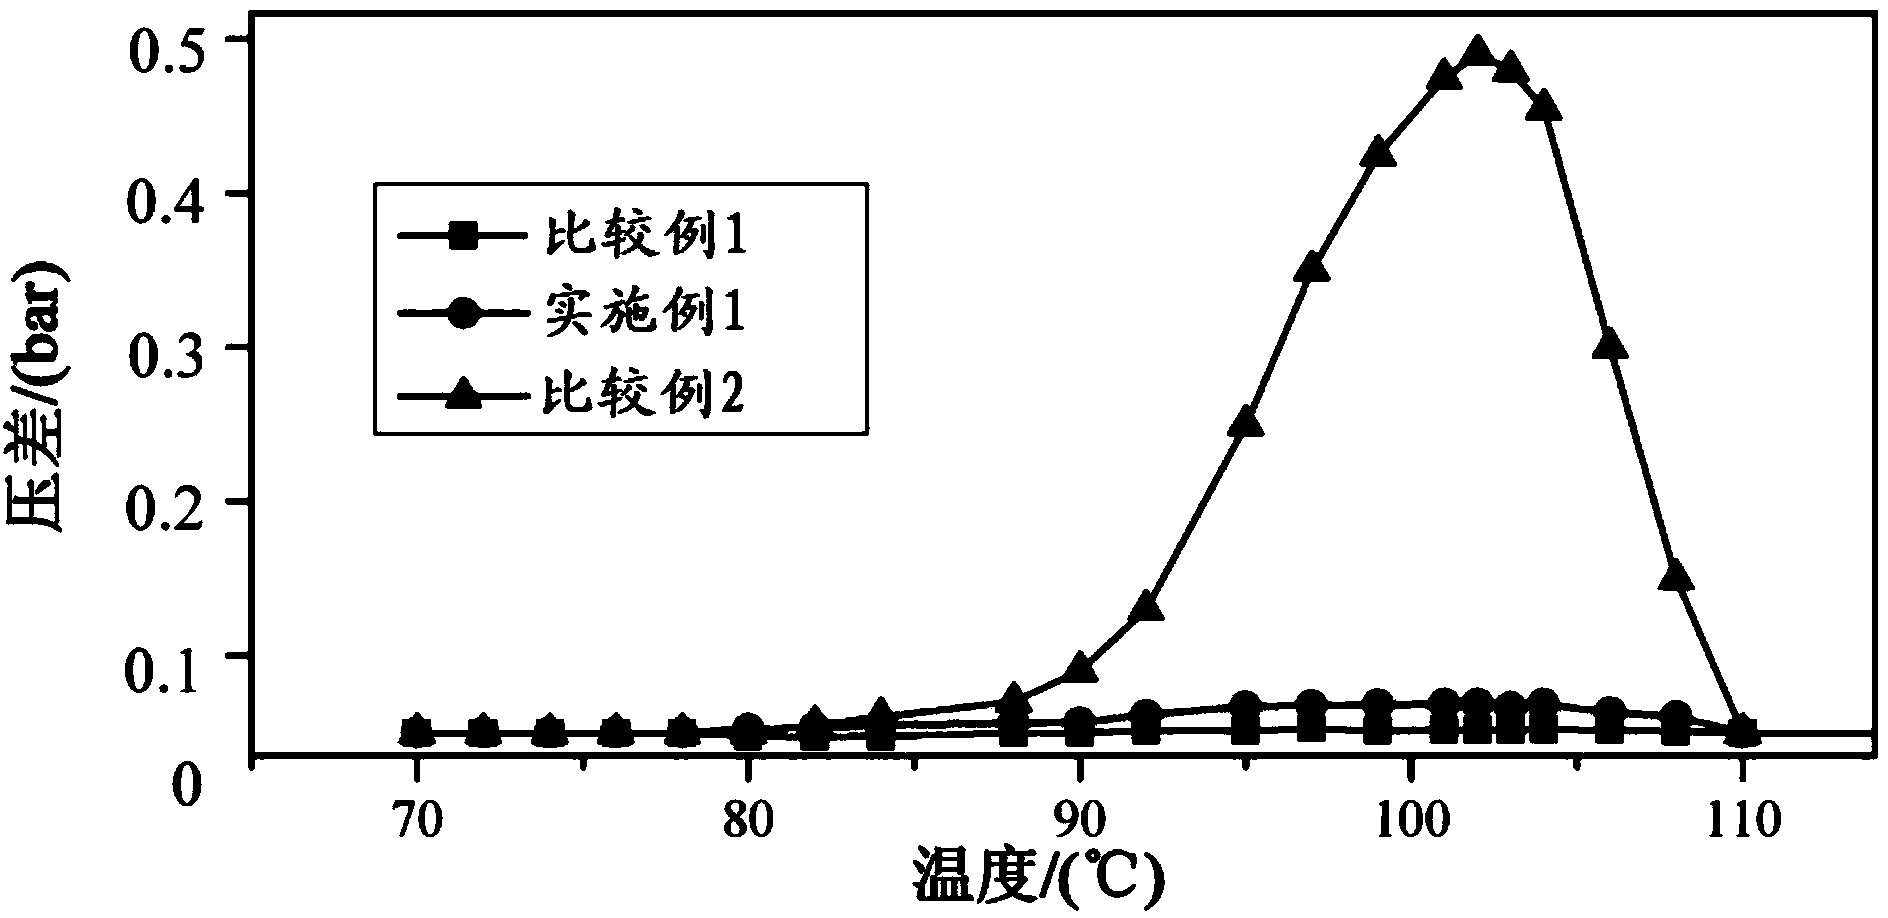 Method for preparing sodium lignosulfonate and application of sodium lignosulfonate as a dye dispersant